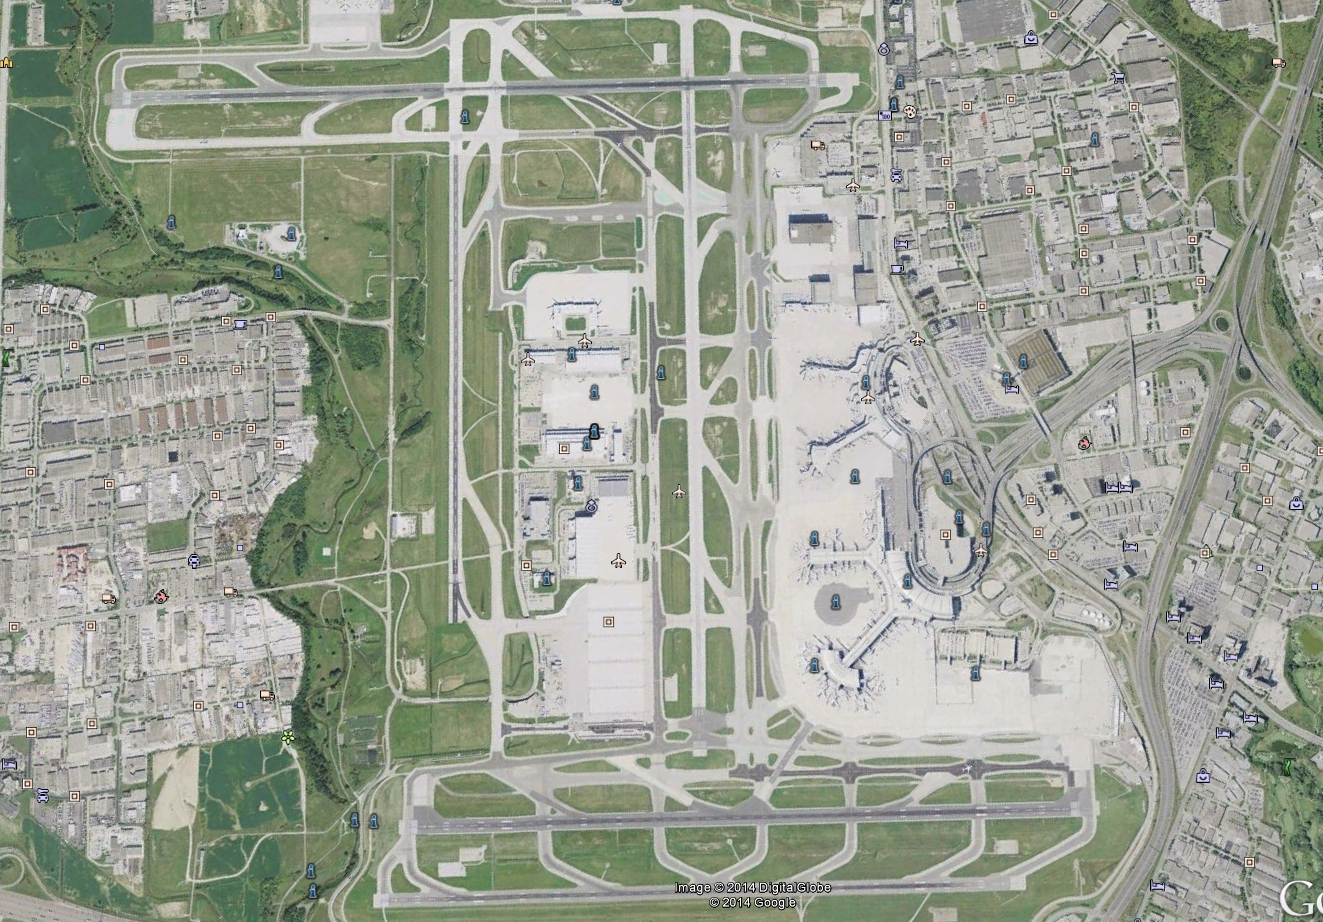 Toronto Pearson International Airport